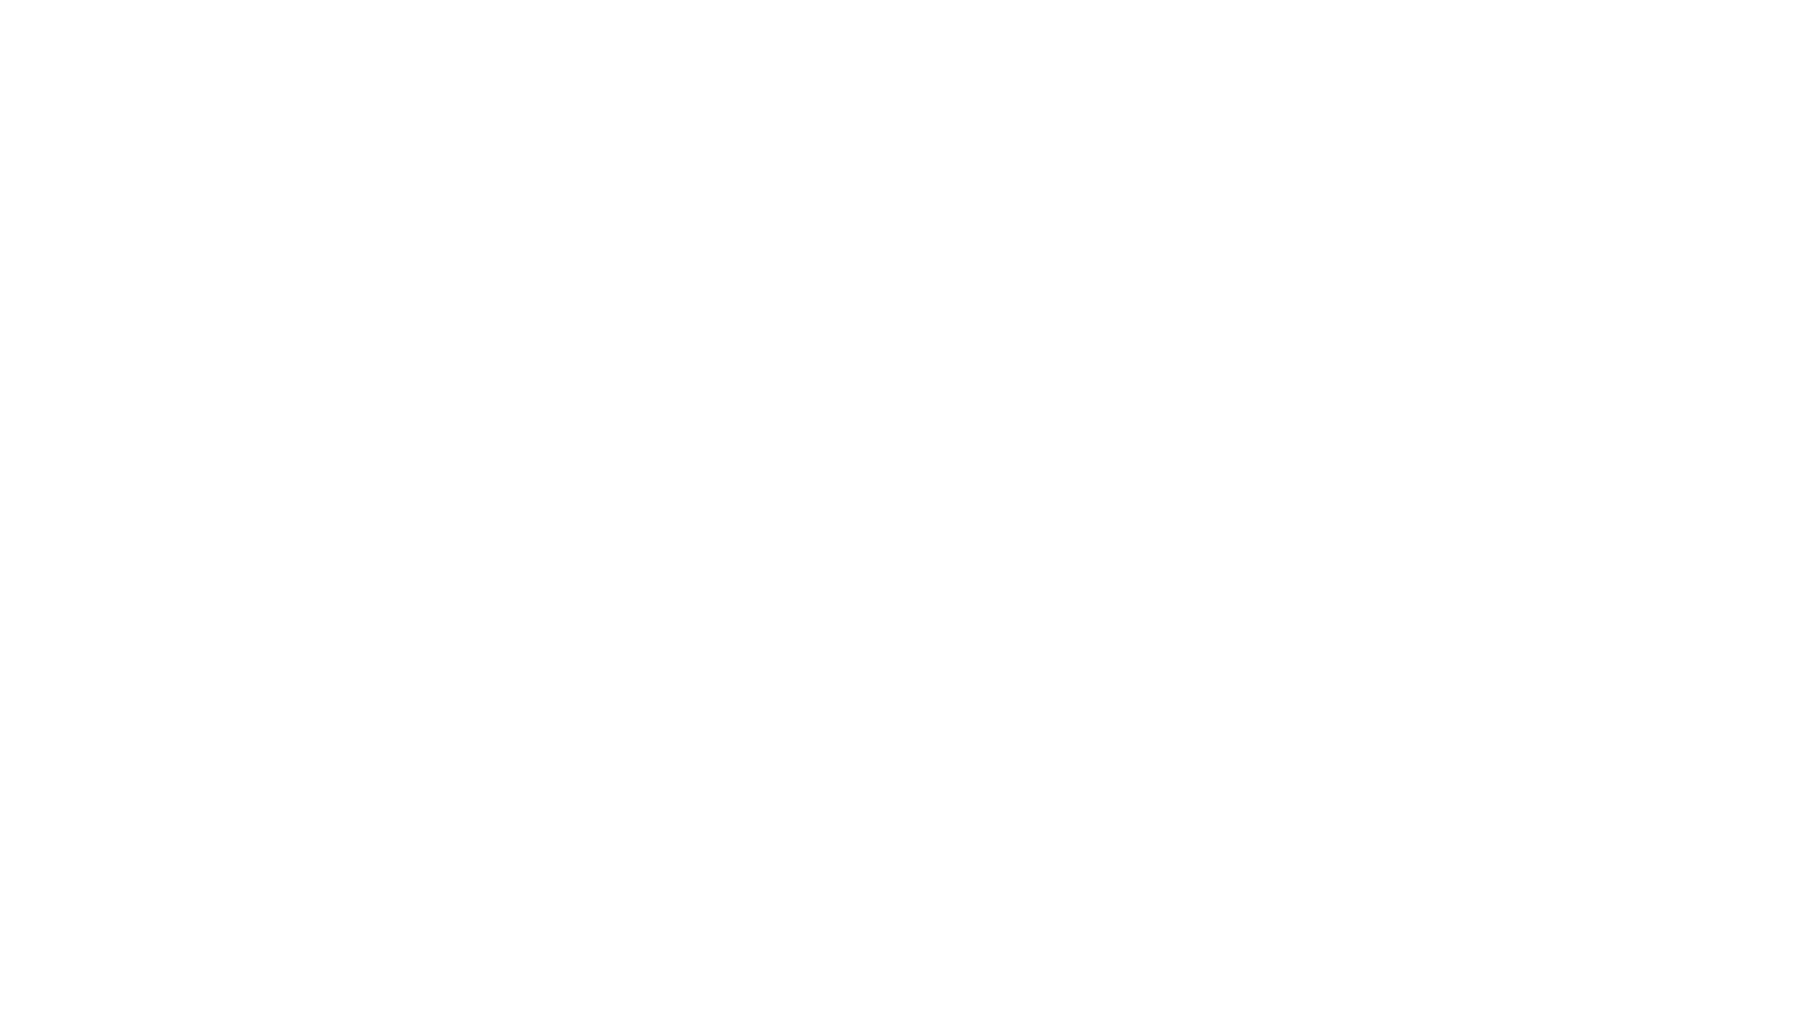 Waikiki RoughWater Swim